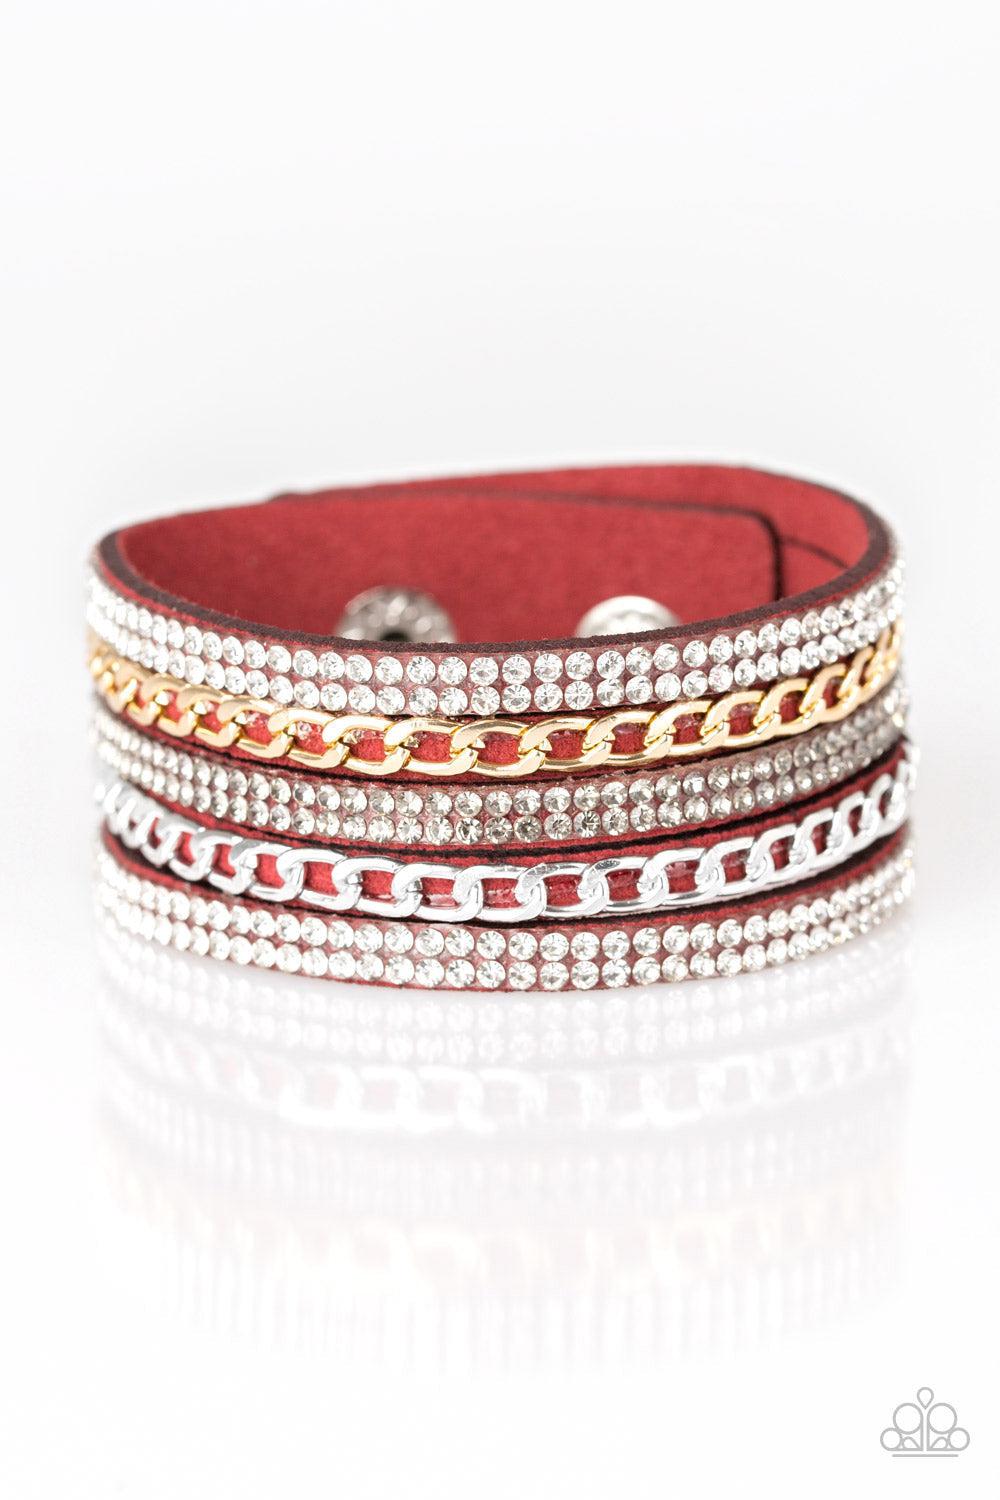 Fashion Fiend Red Bracelet - Paparazzi Accessories- lightbox - CarasShop.com - $5 Jewelry by Cara Jewels